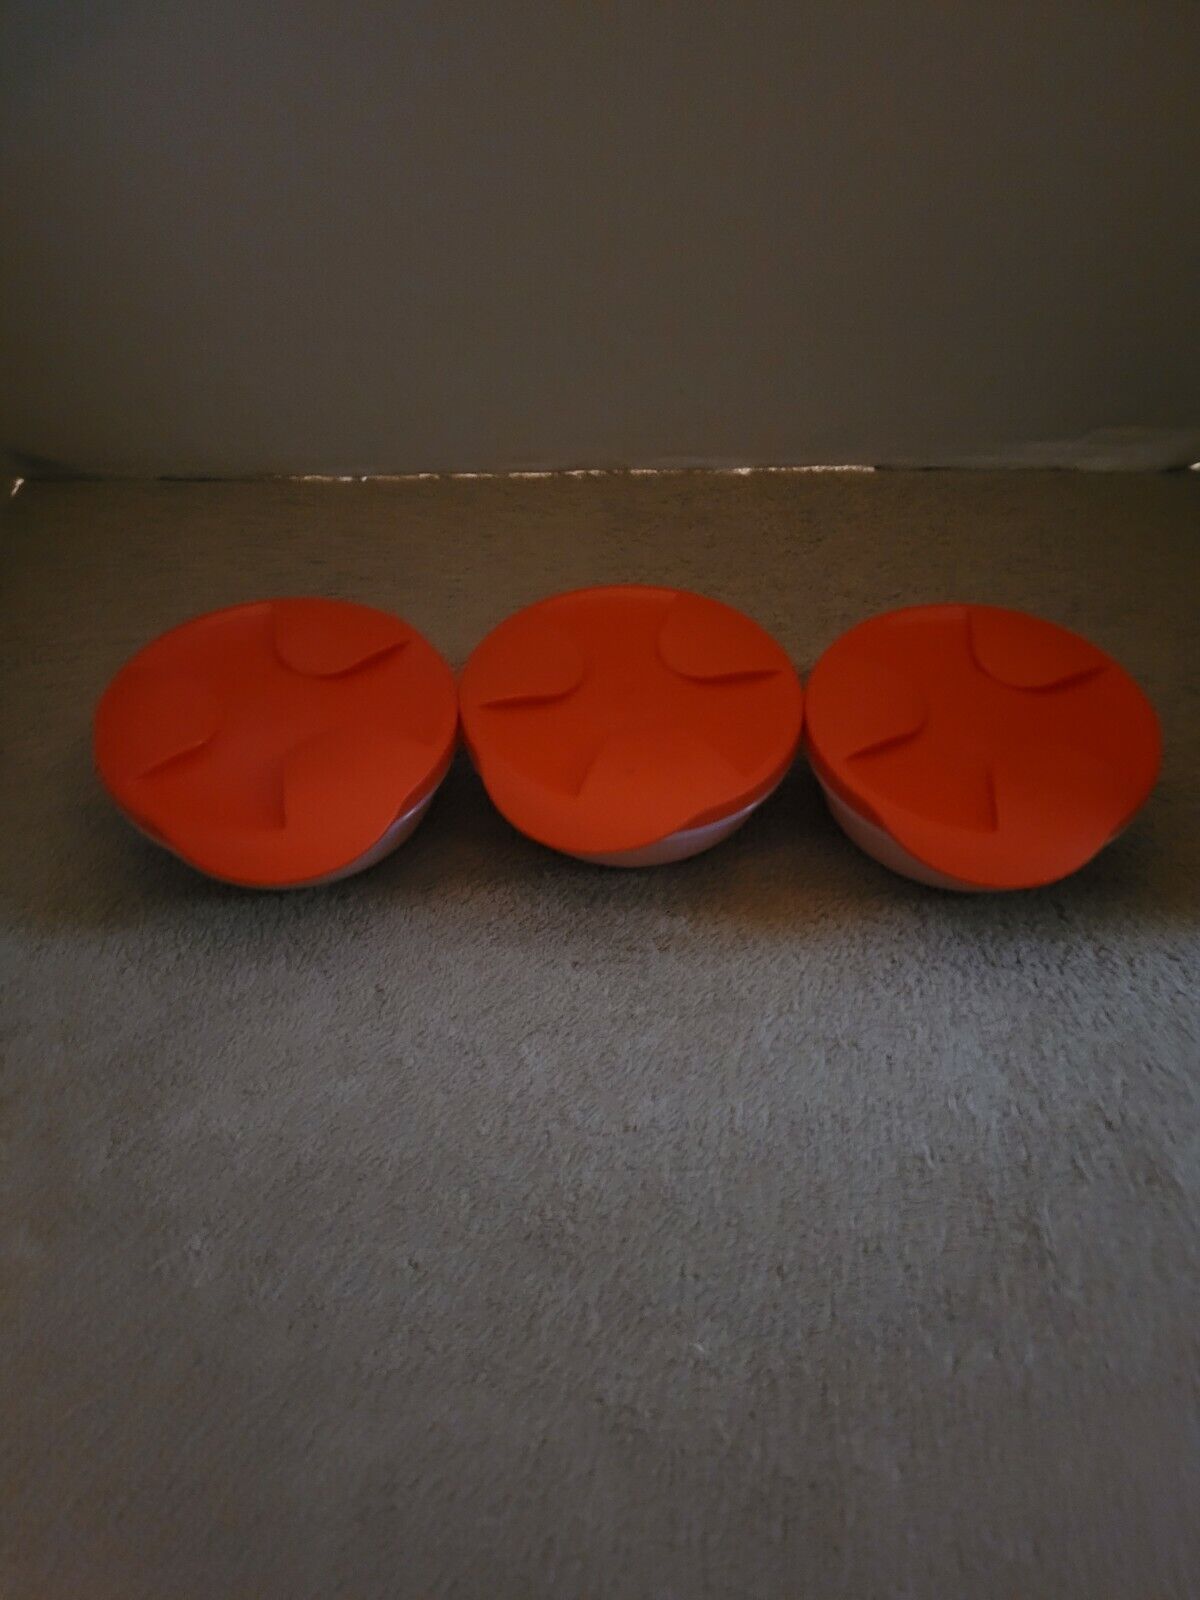 3 Tupperware Modular Bowls #2208 with Red #5419 Interlocking Seals 10 oz.